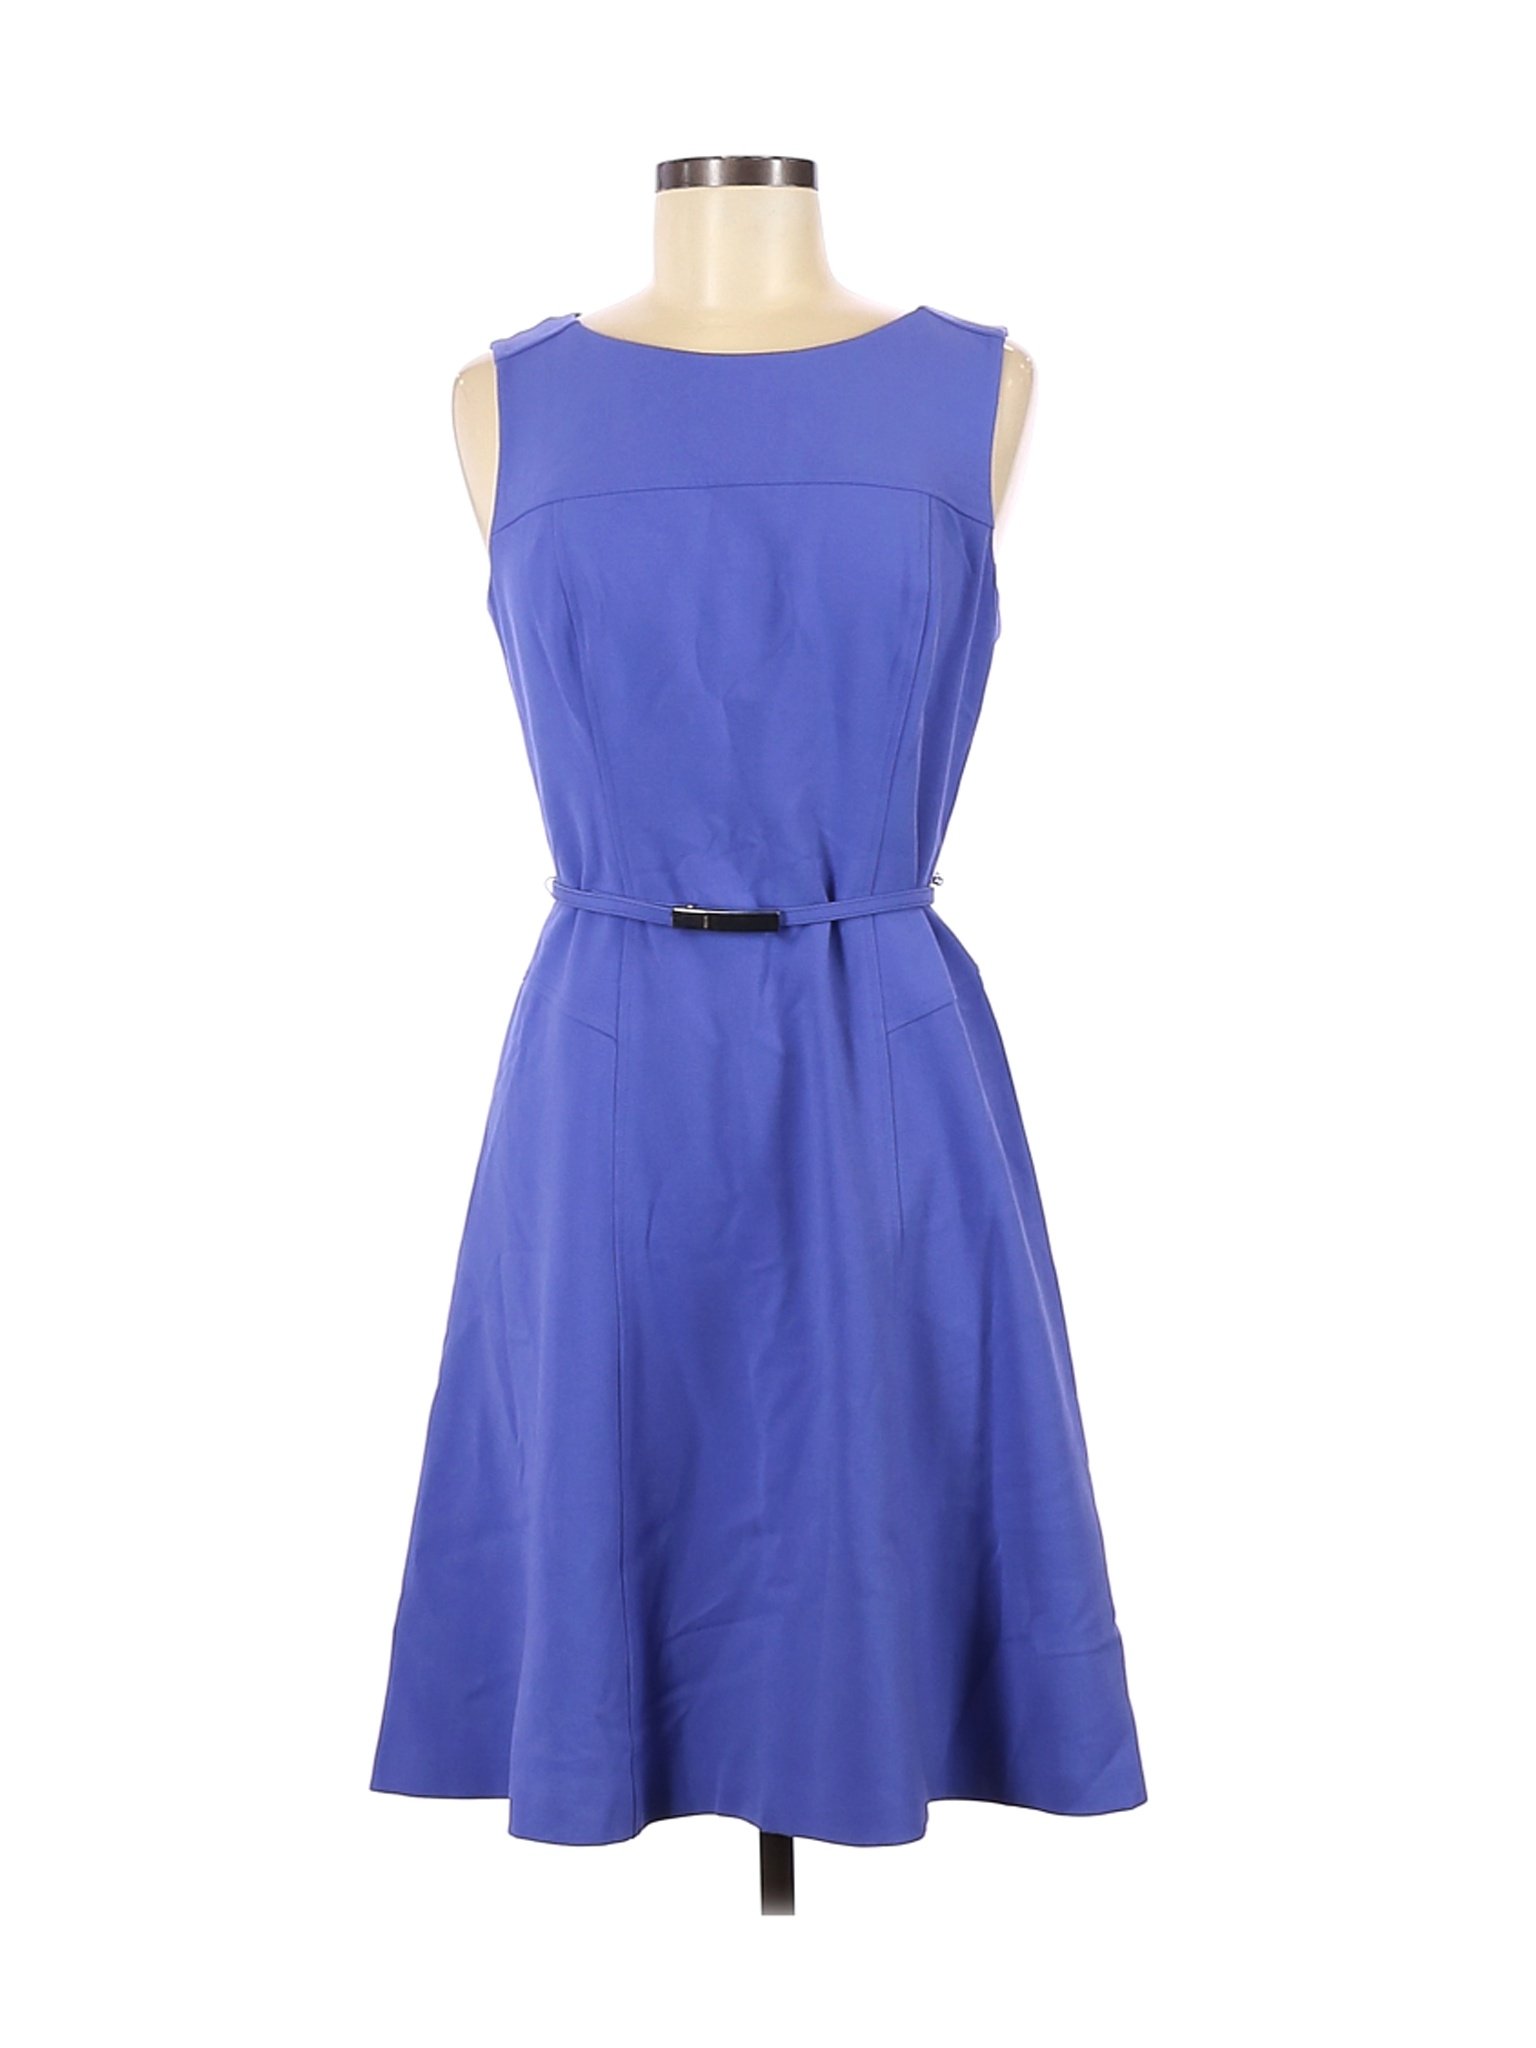 White House Black Market Women Blue Casual Dress 6 | eBay